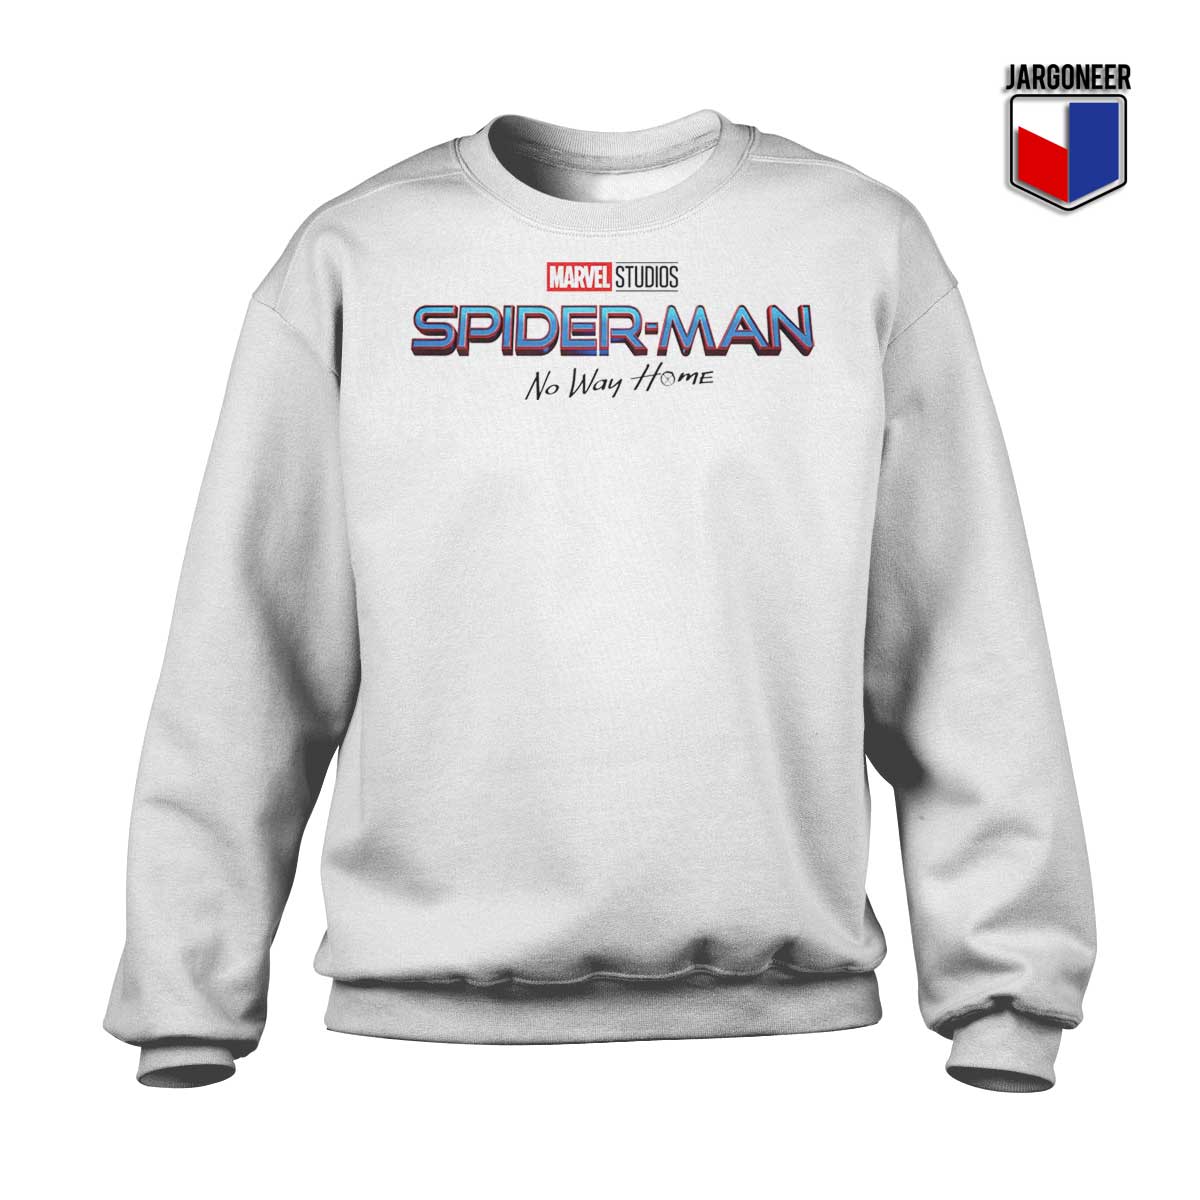 Spider Man No Way Home Sweatshirt - Shop Unique Graphic Cool Shirt Designs